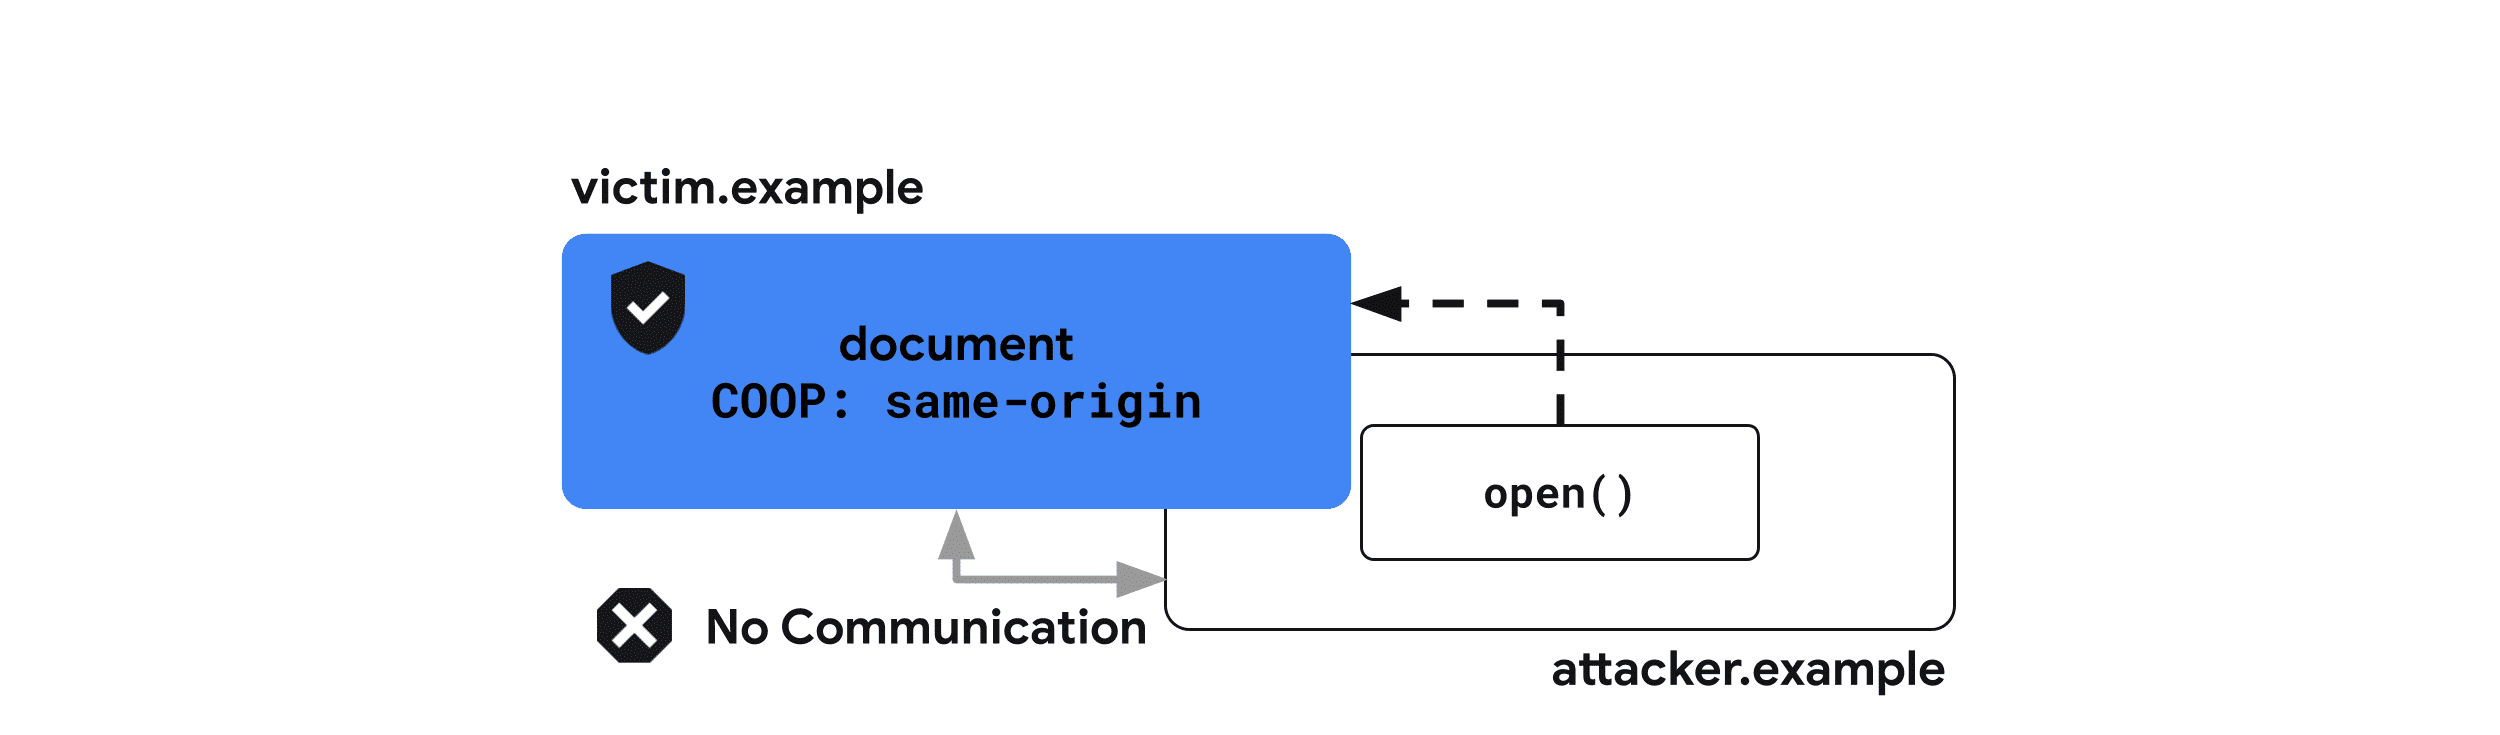 Cross-Origin-Opener-Richtlinie: Same-Origin